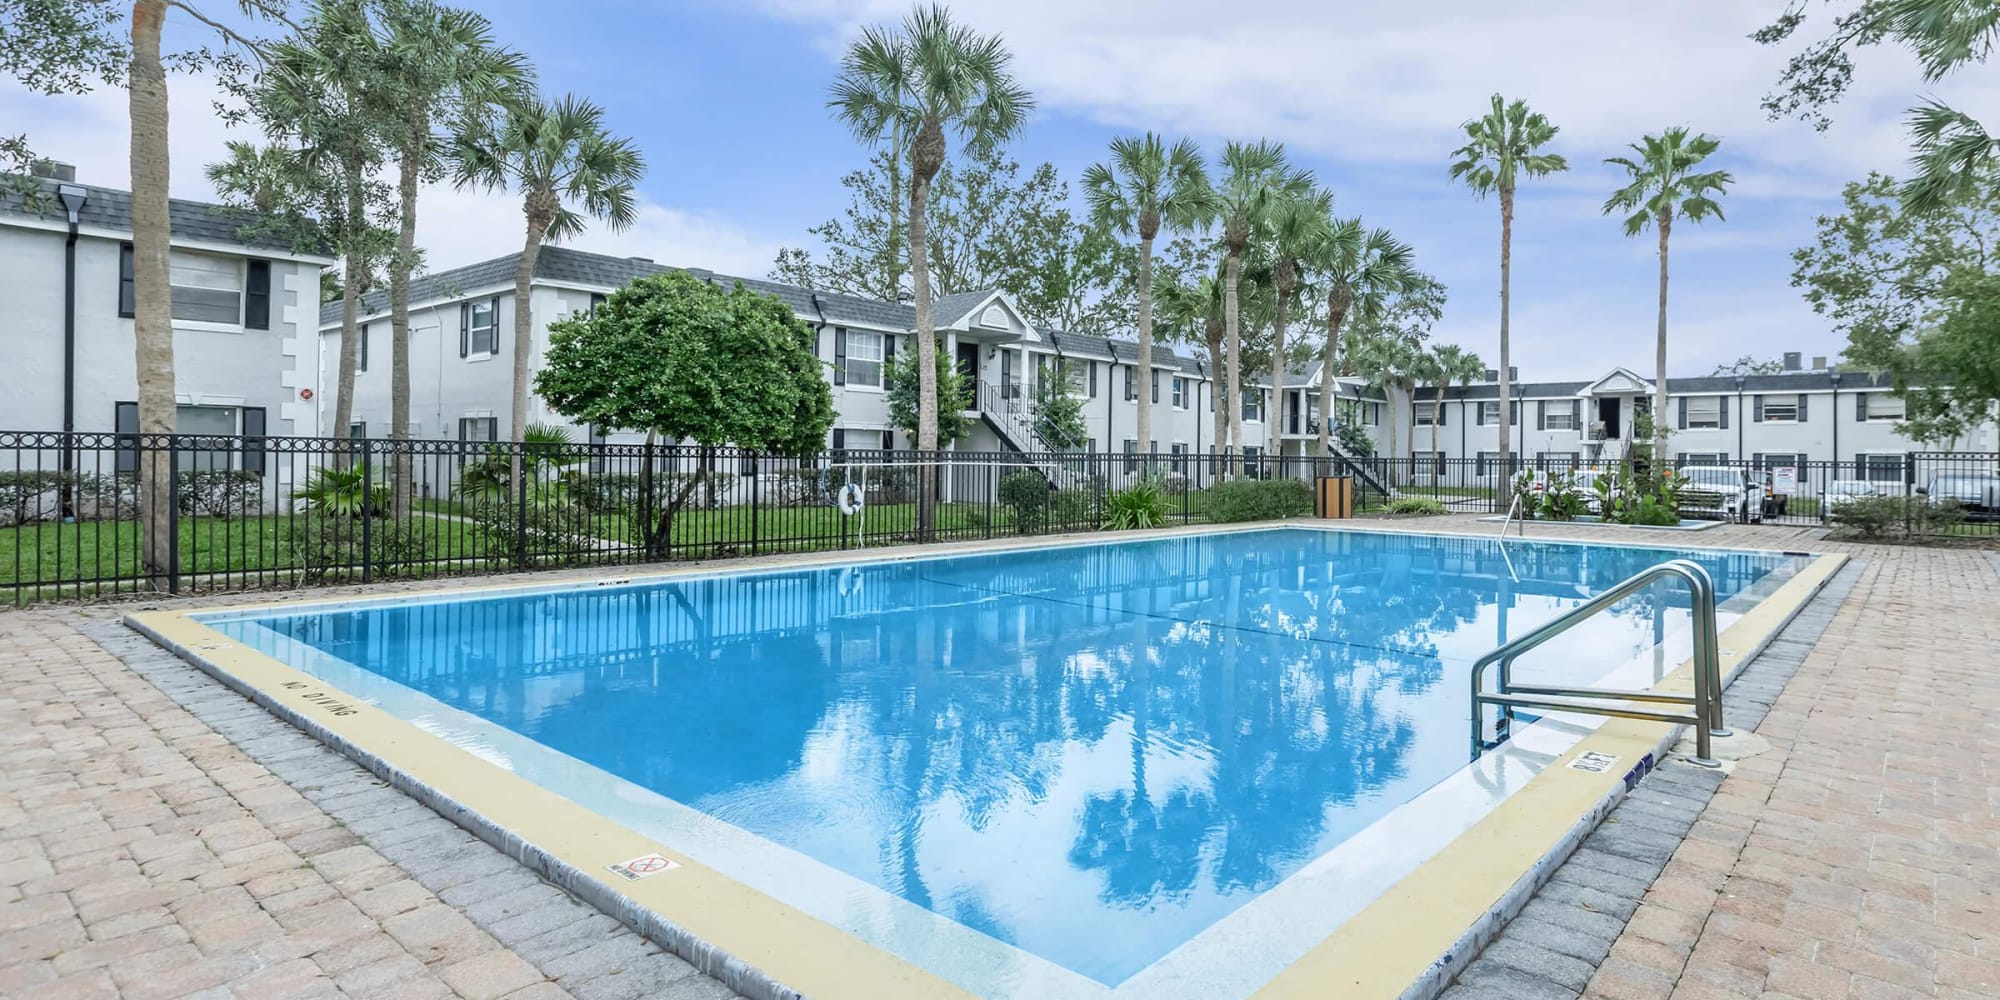 Spacious swimming pool at Magnolia Court in Orlando, Florida